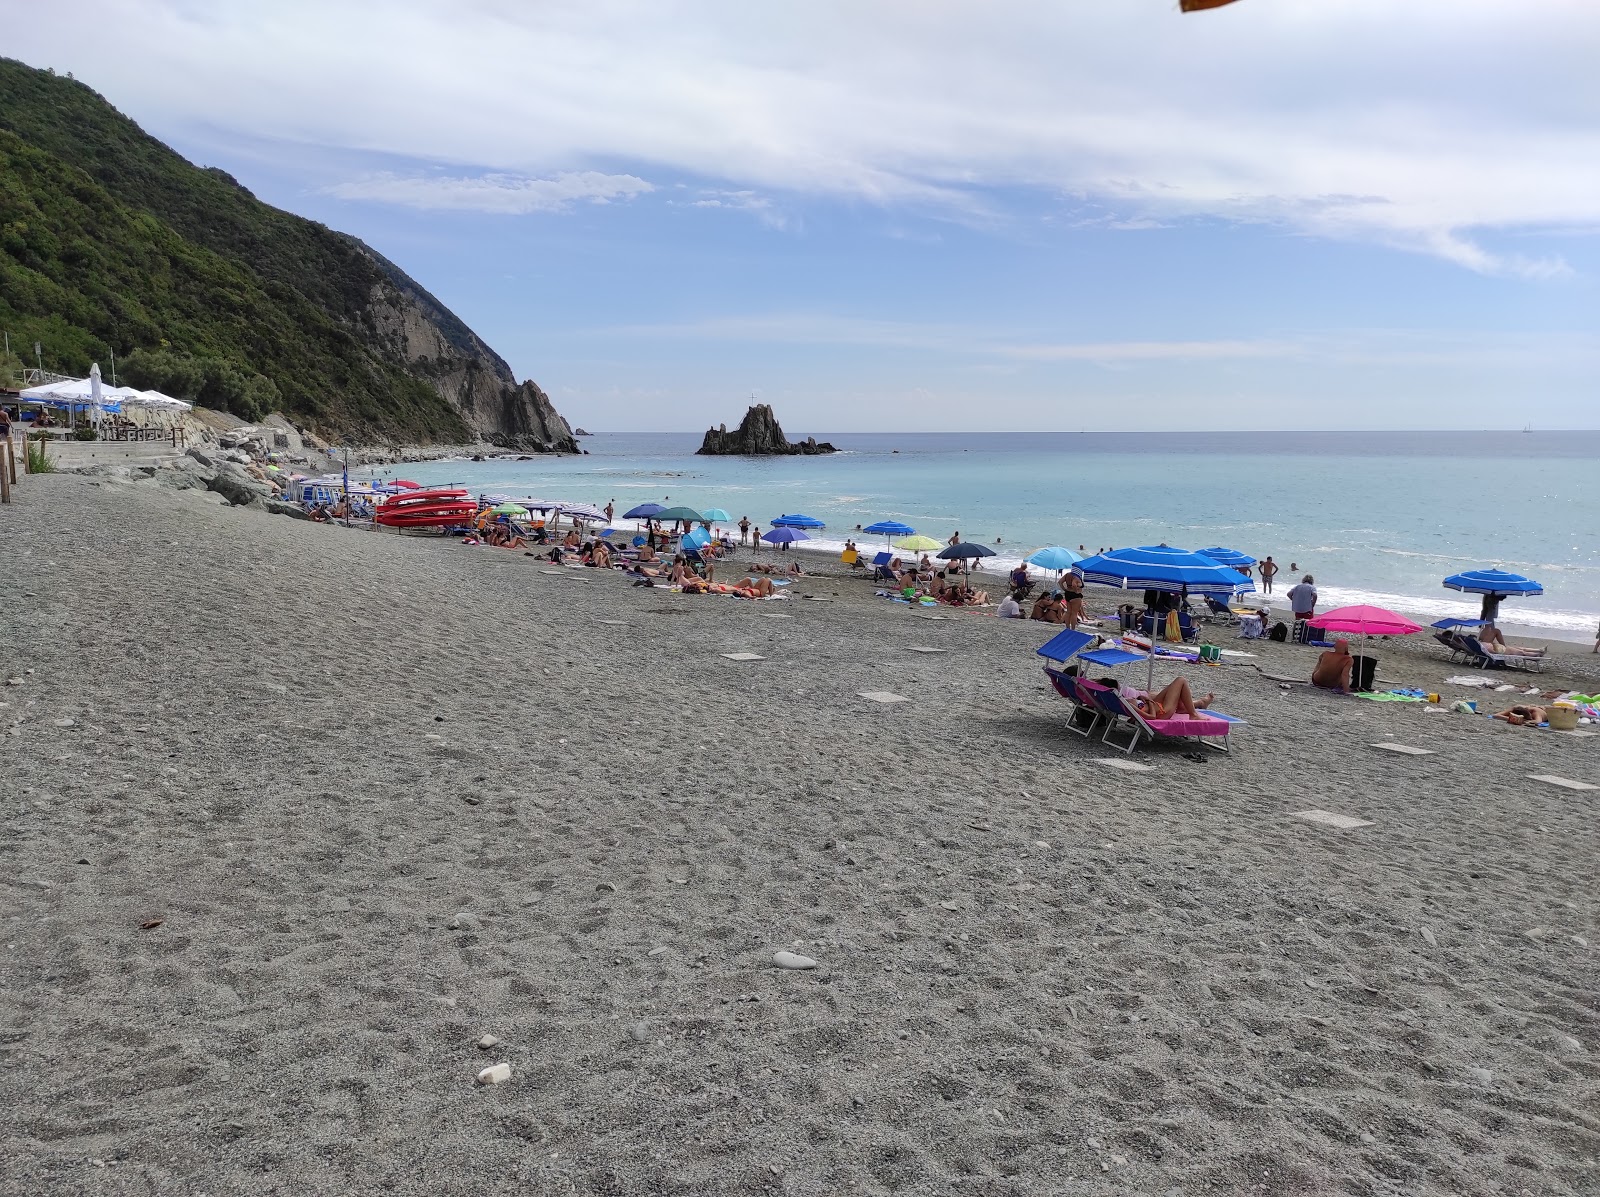 Foto van Spiaggia Riva Trigoso met direct strand